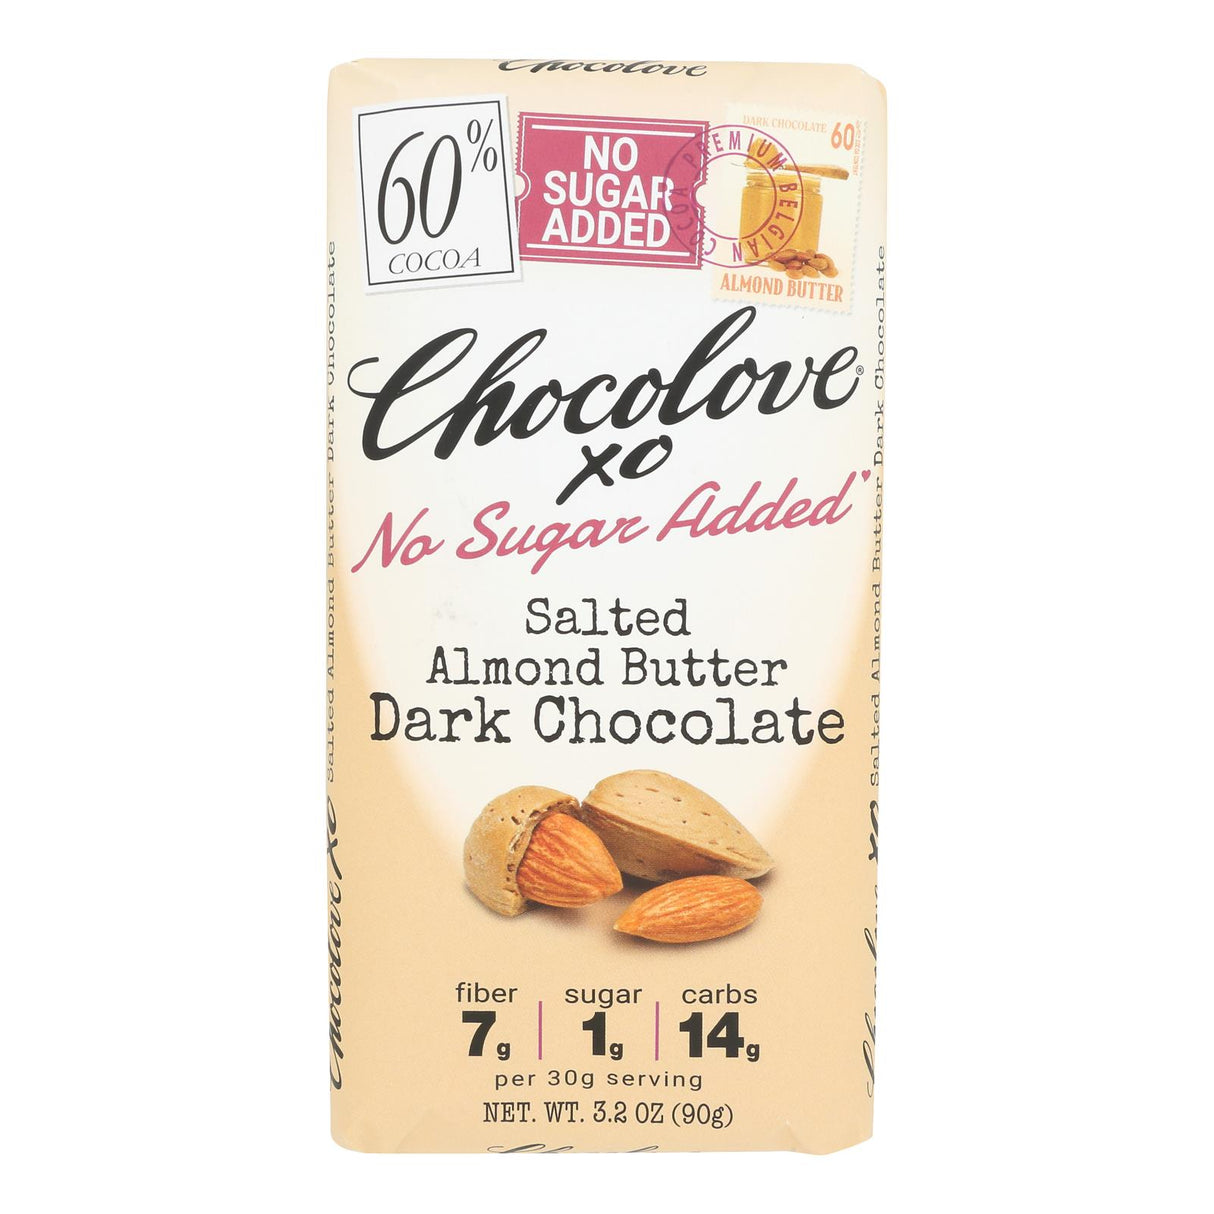 Chocolove XO Dark Chocolate Bar with Salted Almond Butter - 10-Pack - 3.2 oz Each - Cozy Farm 